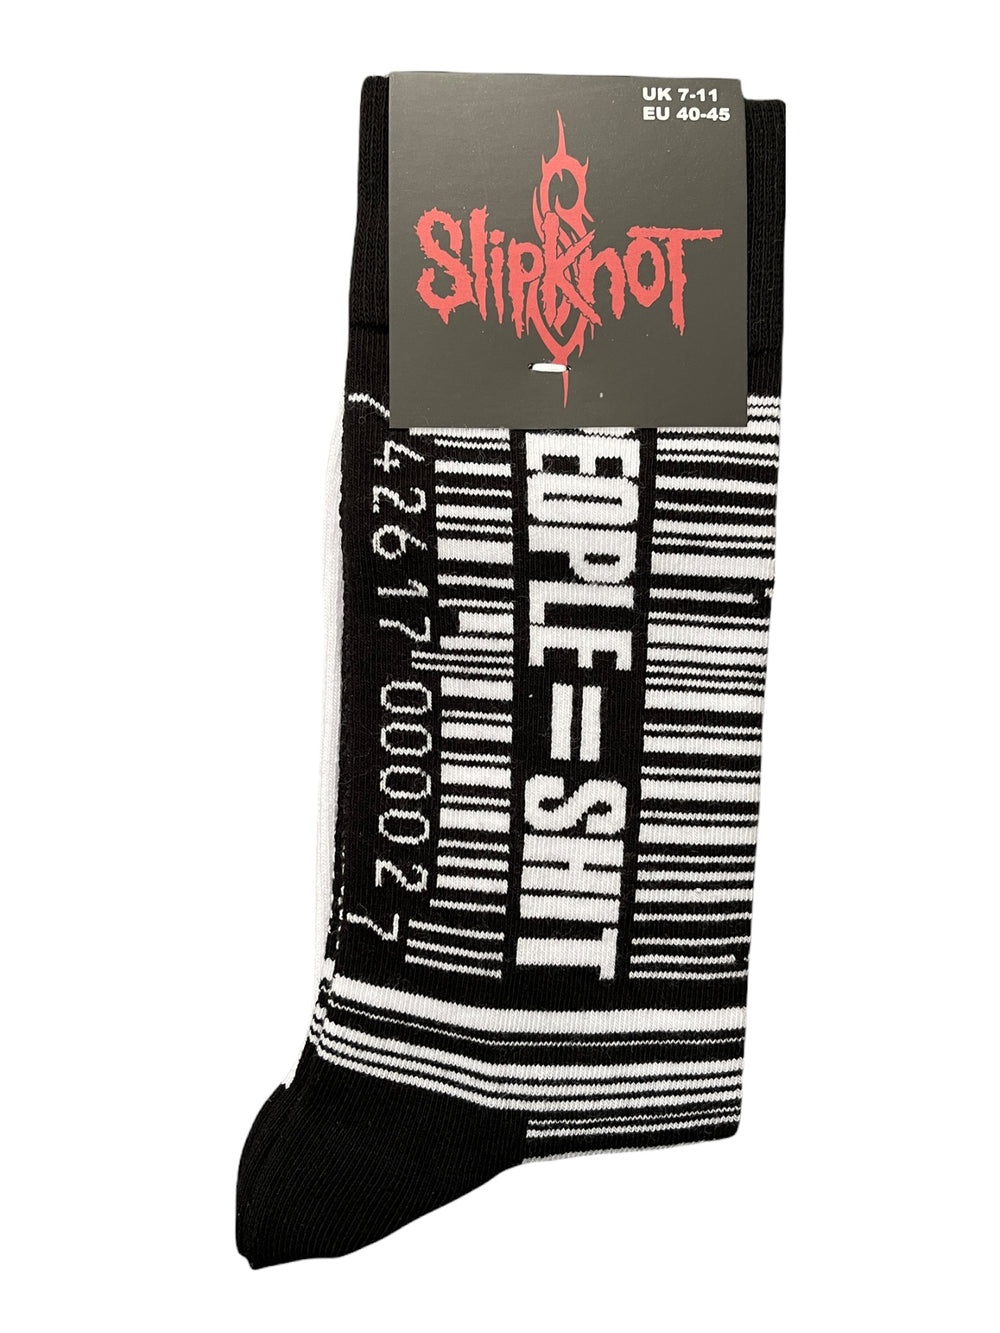 Slipknot Barcode Official Product 1 Pair Jacquard Socks Size 7-11 UK Brand New